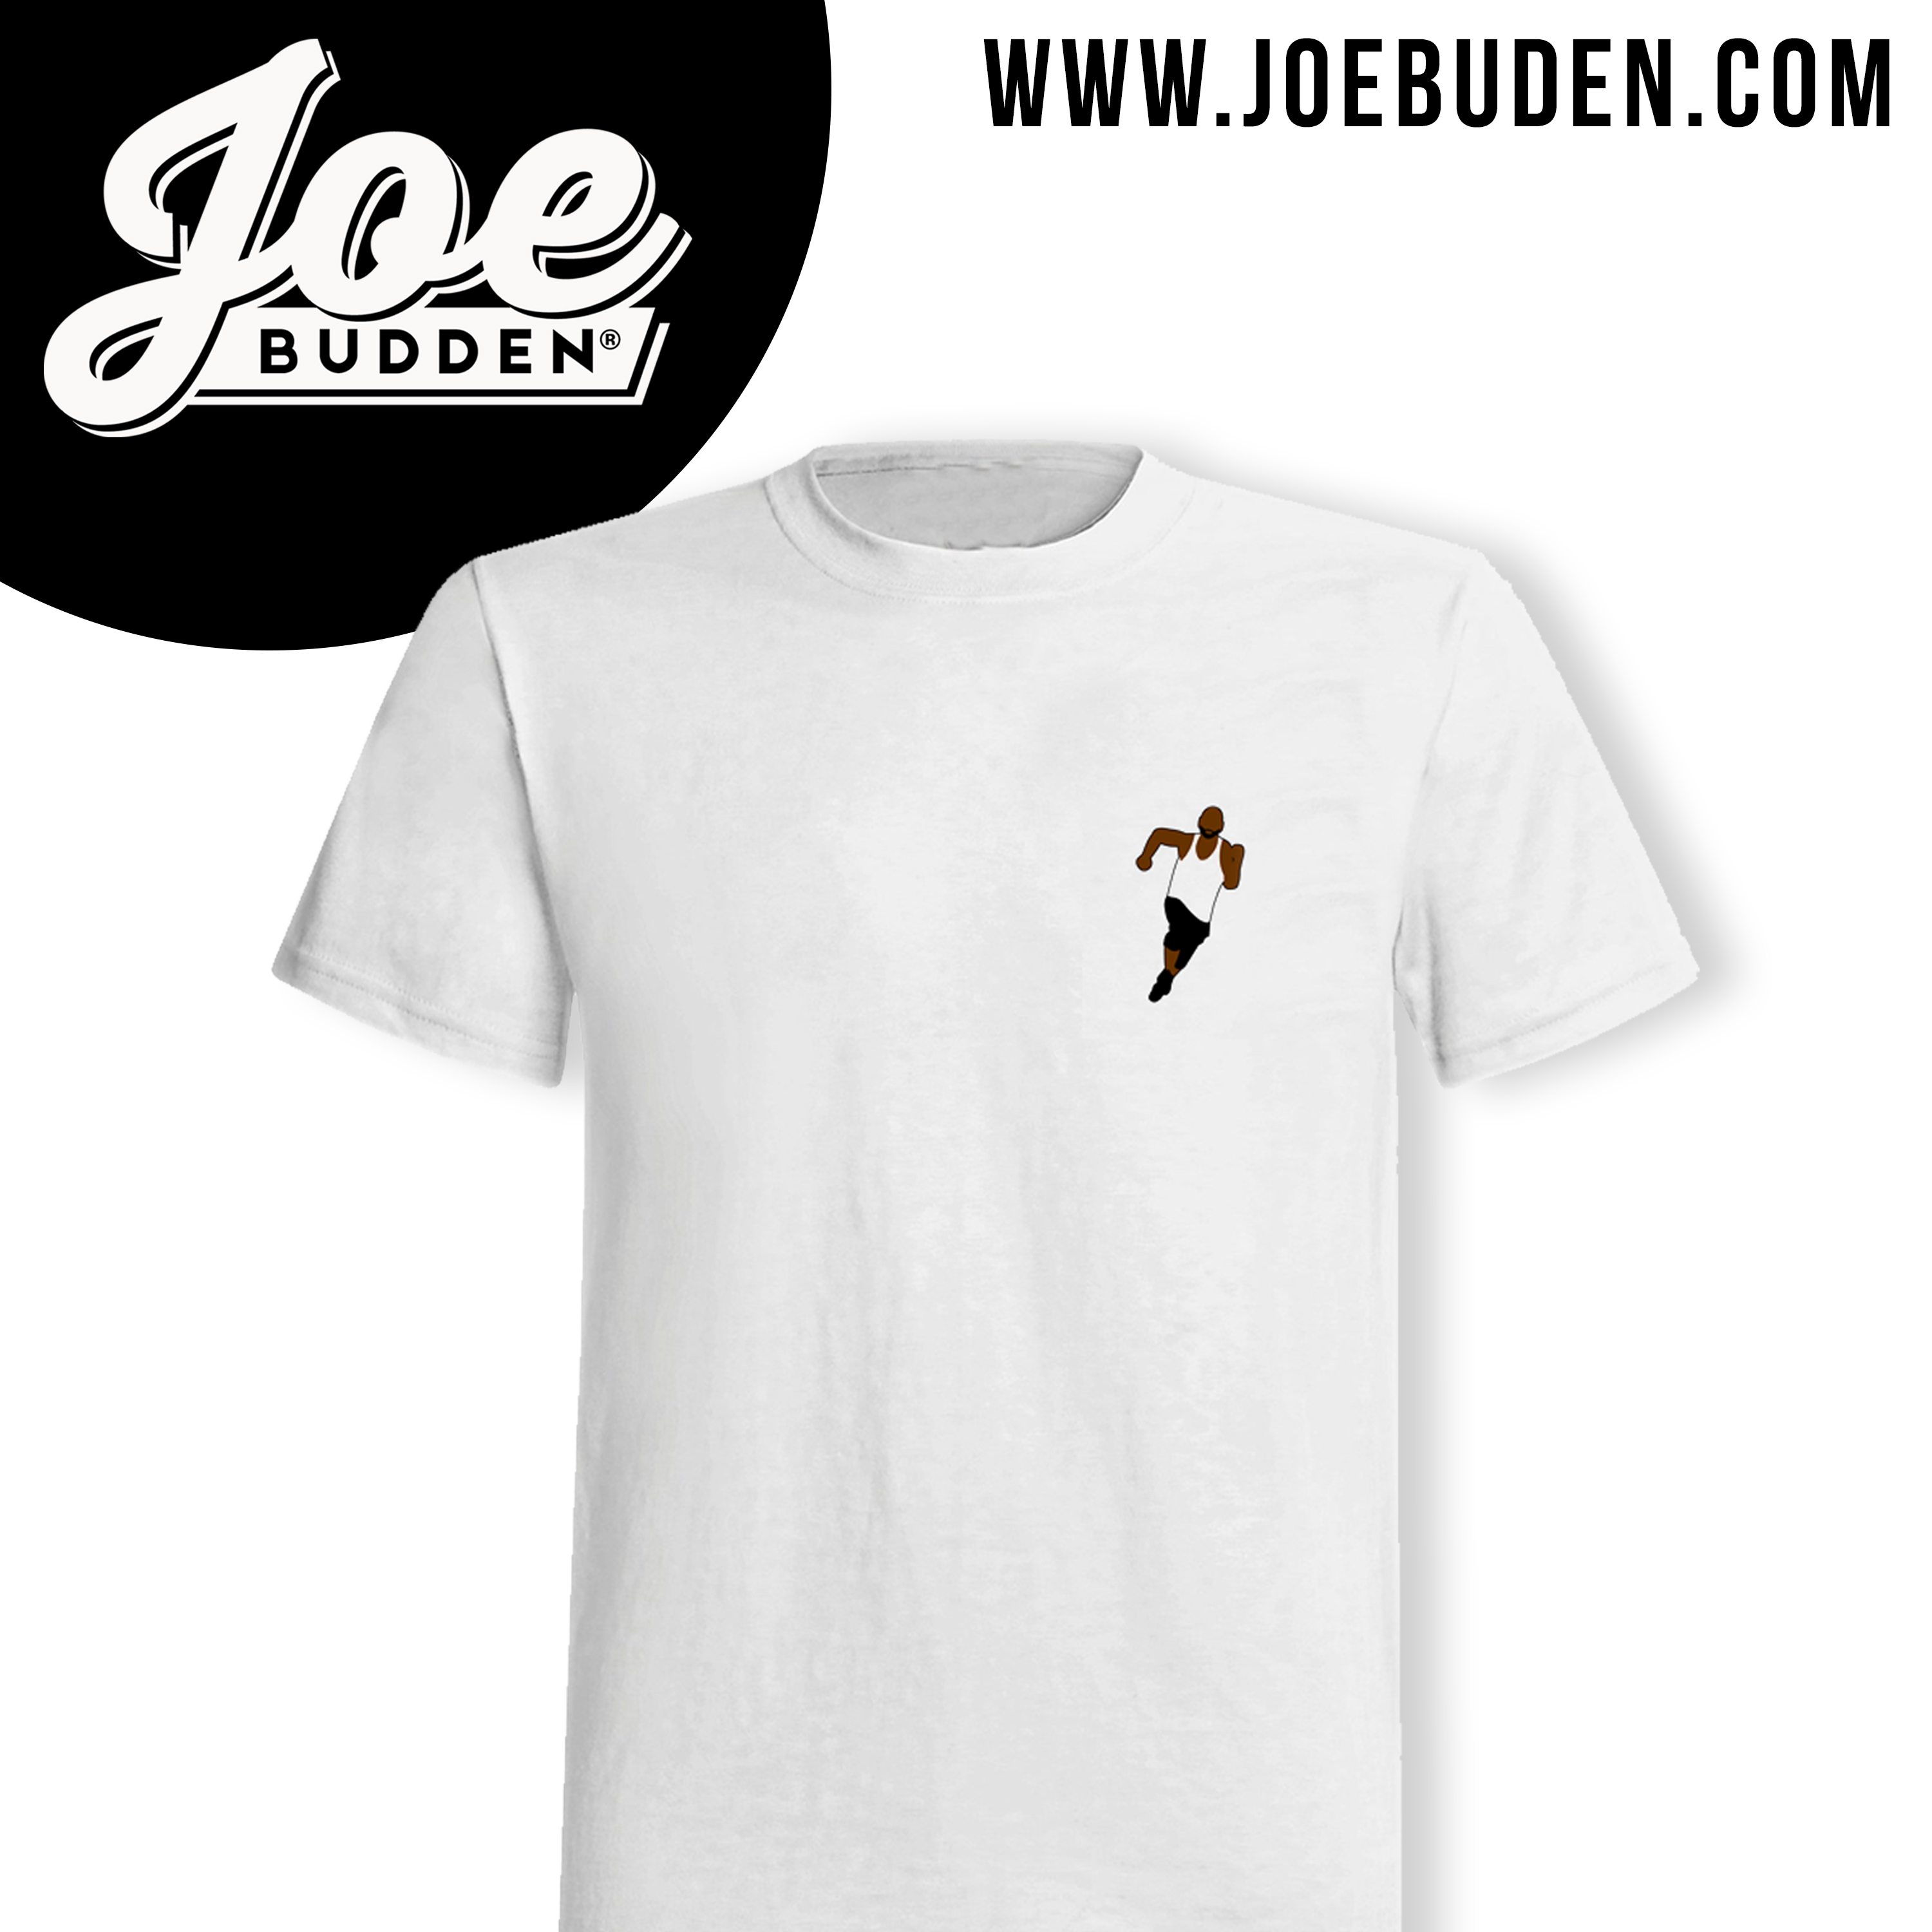 Joe Budden Drake Feud Merch, White T-Shirt